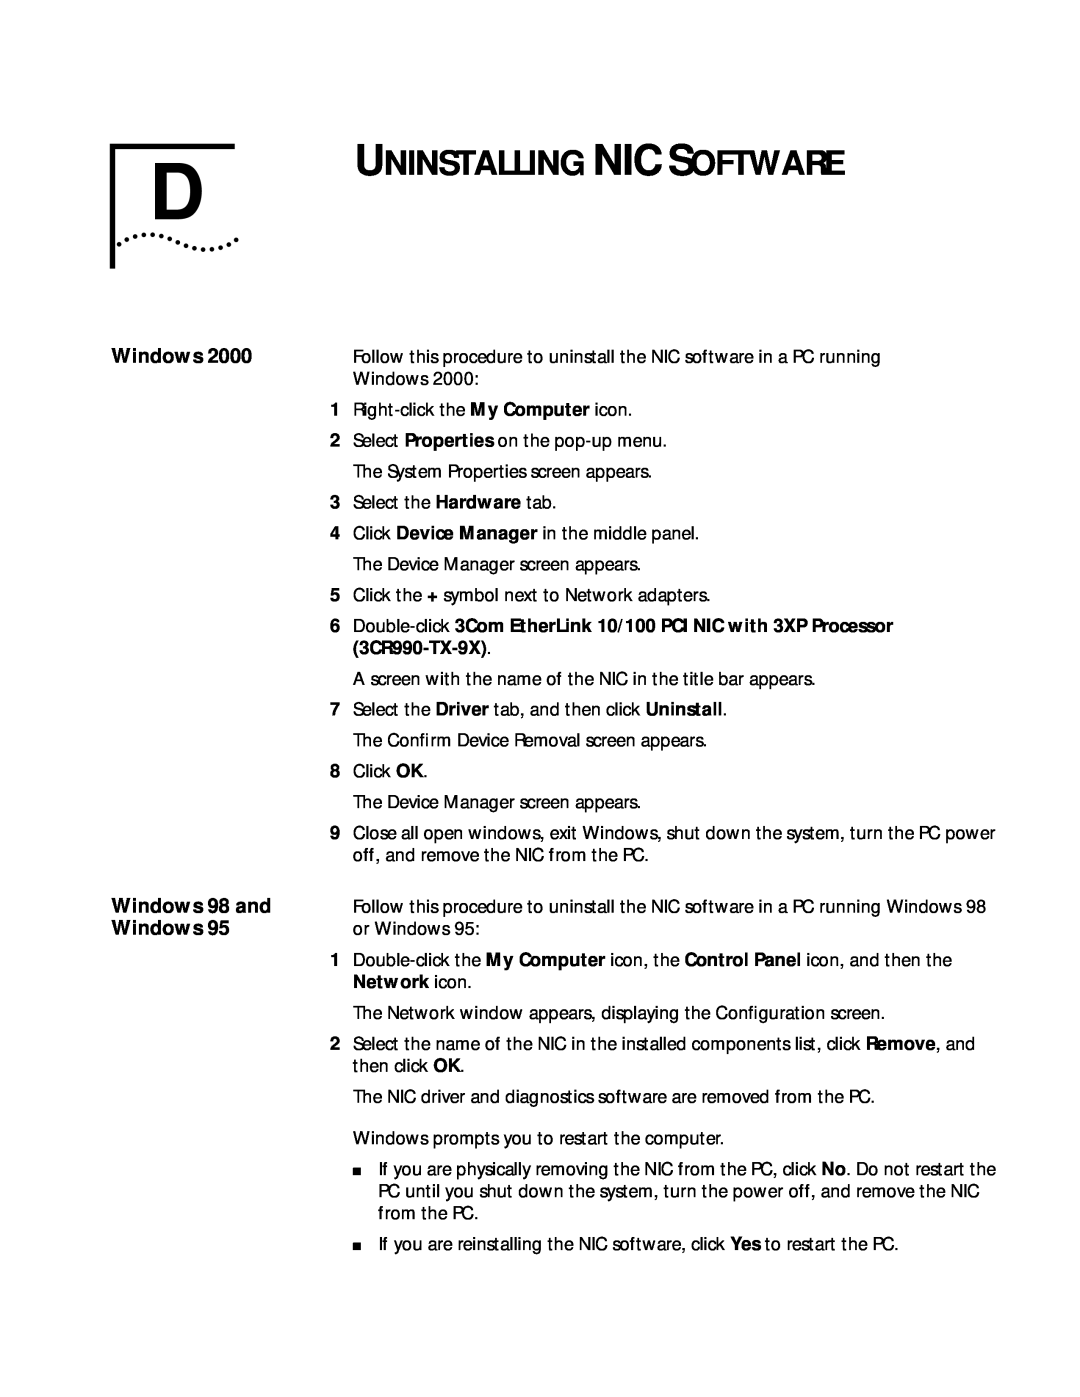 3Com 3CR990 manual Uninstalling Nic Software, Windows 98 and, or Windows 